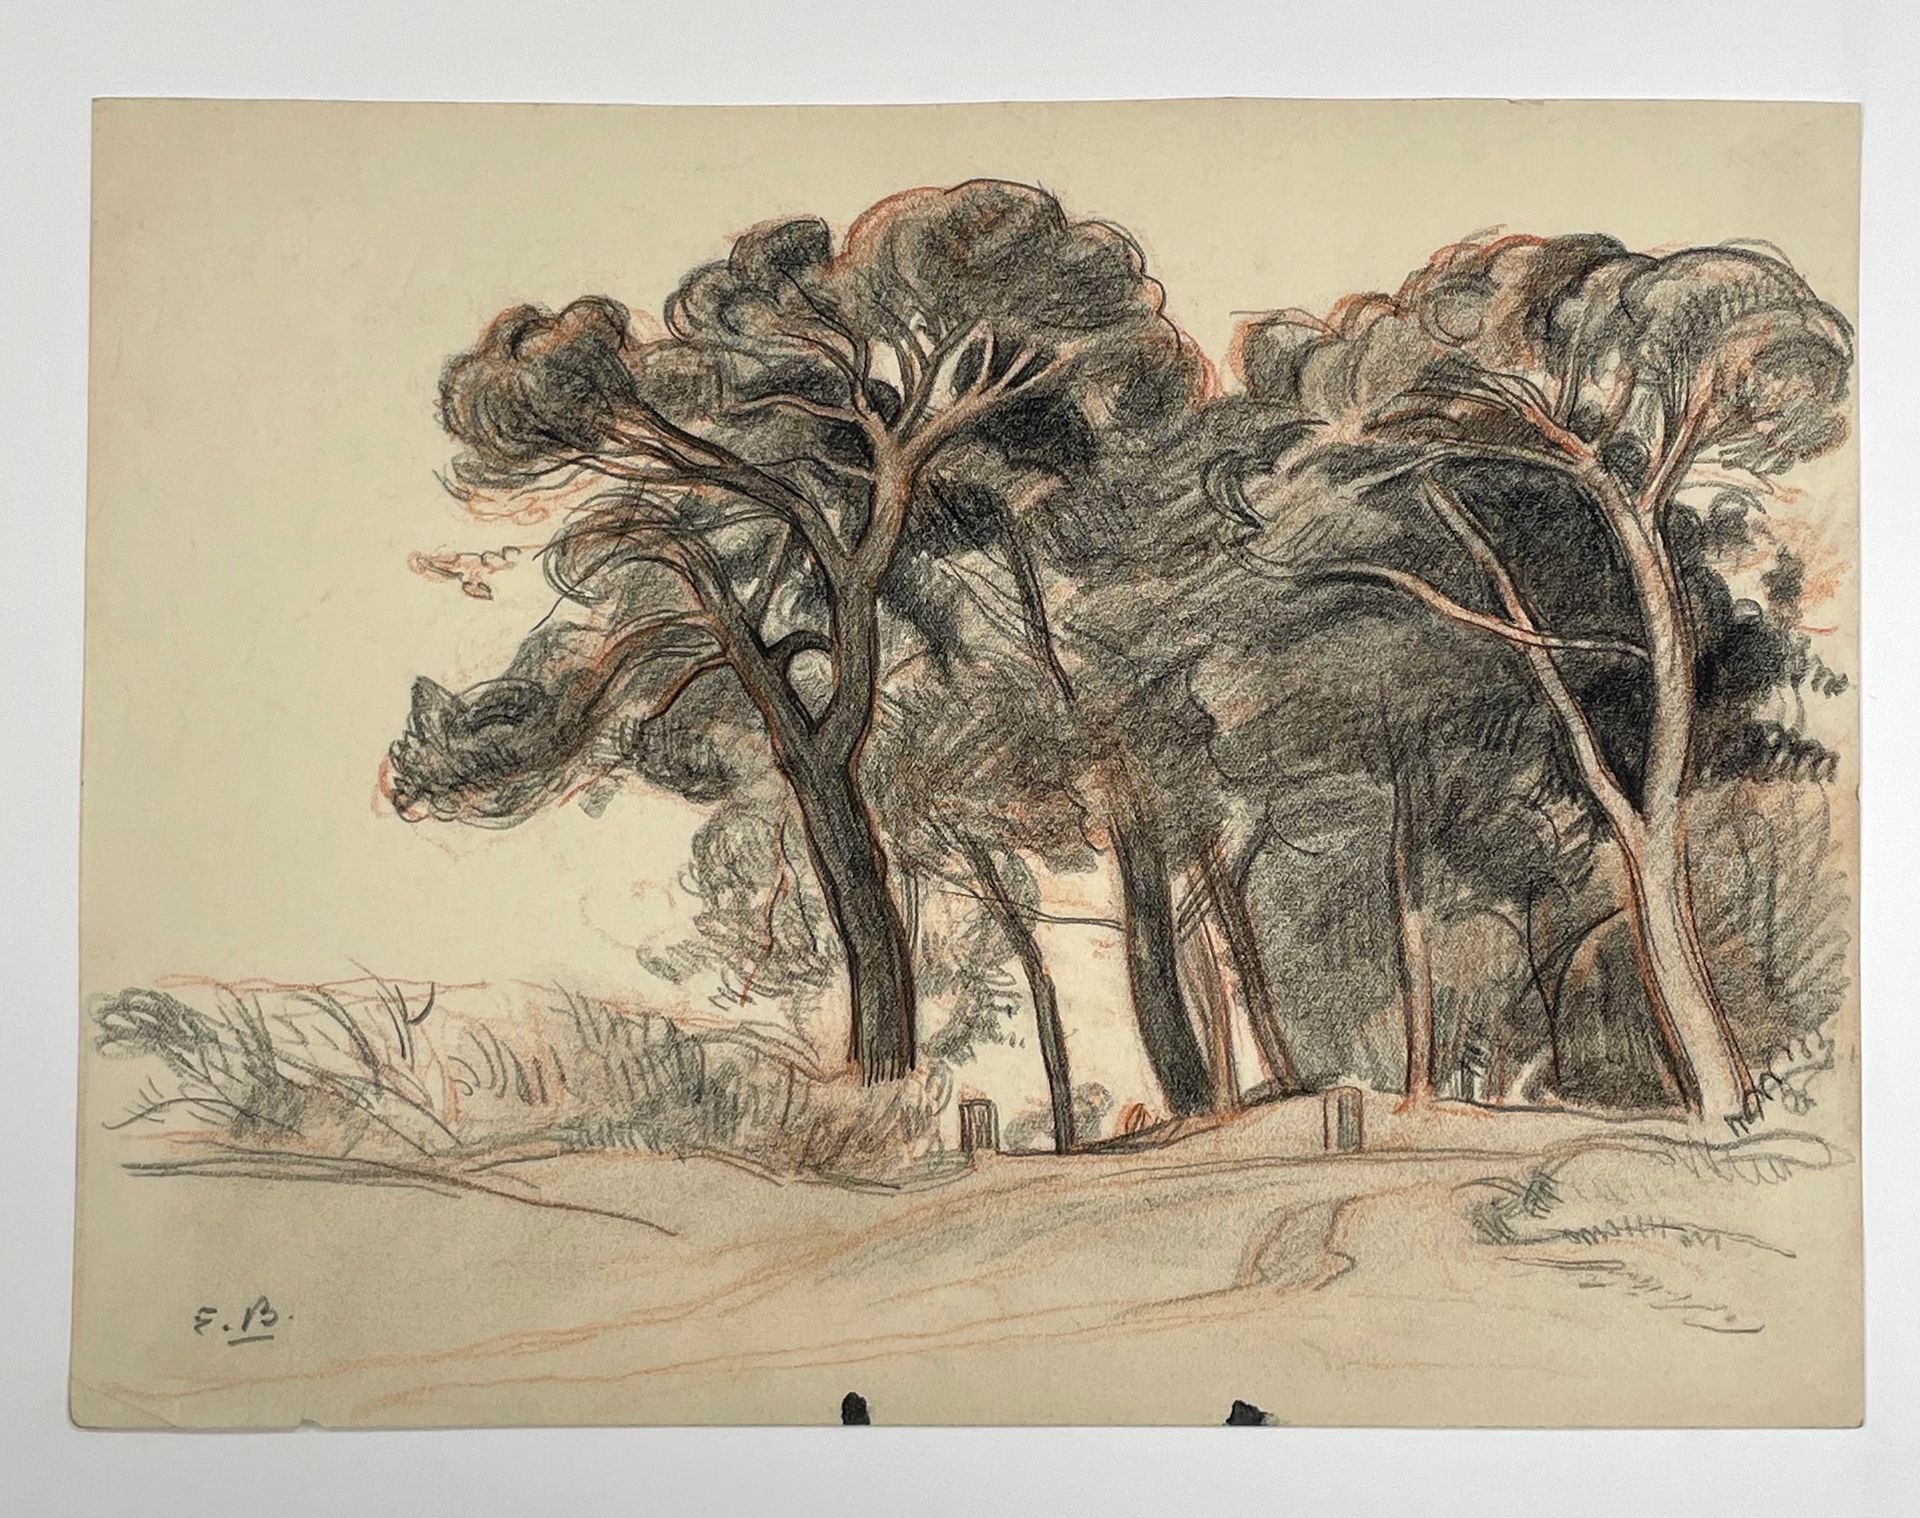 Null "松树" - 埃米尔-玛丽-博梅

纸上炭笔和红粉笔画，左下角有签名。

尺寸：20 x 26,8厘米。